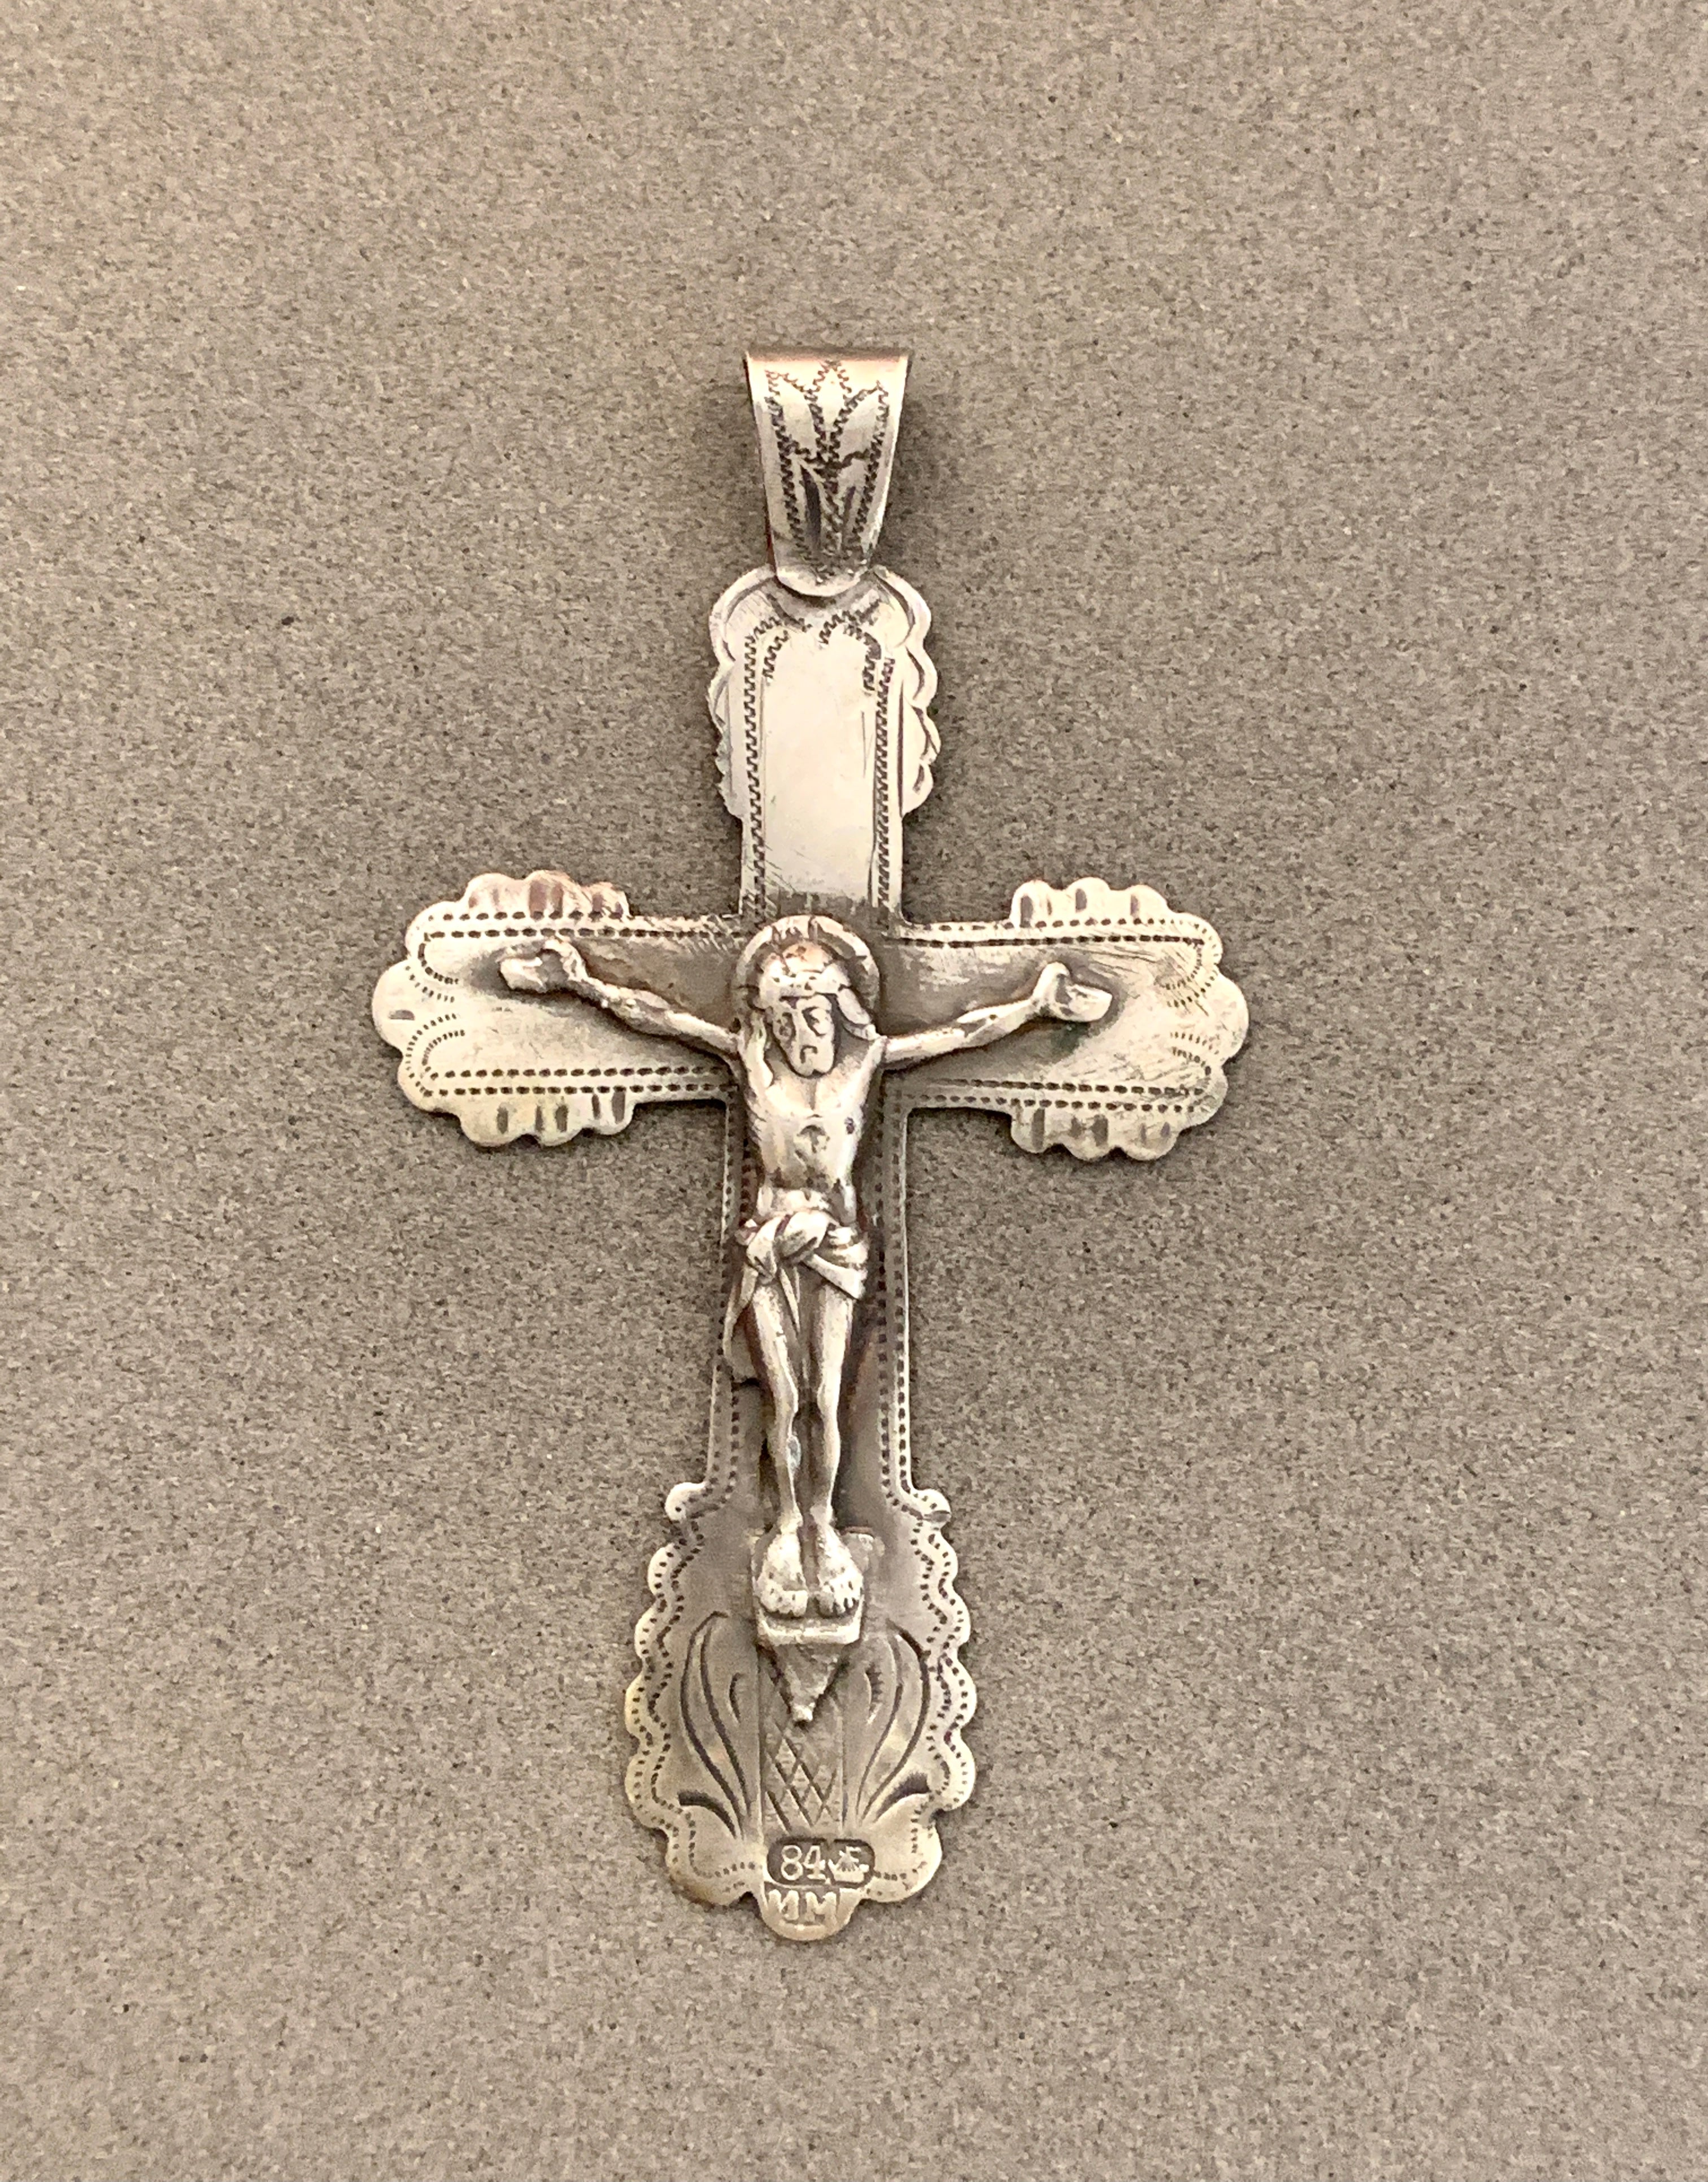 Vintage Crucifix Cross Pendant "84" Silver